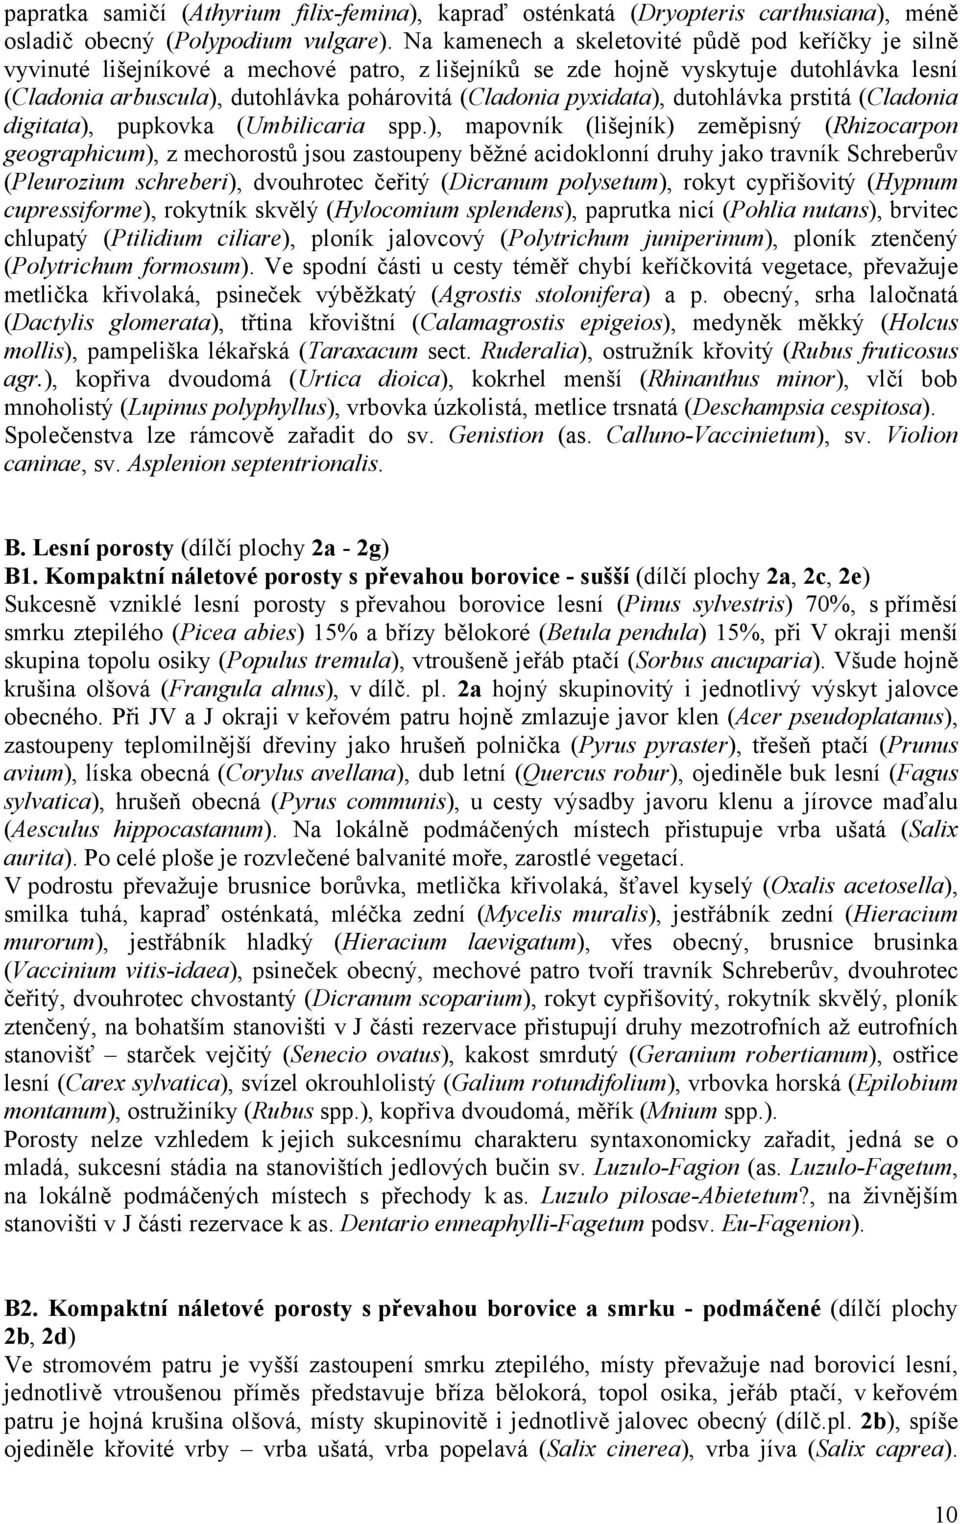 pyxidata), dutohlávka prstitá (Cladonia digitata), pupkovka (Umbilicaria spp.